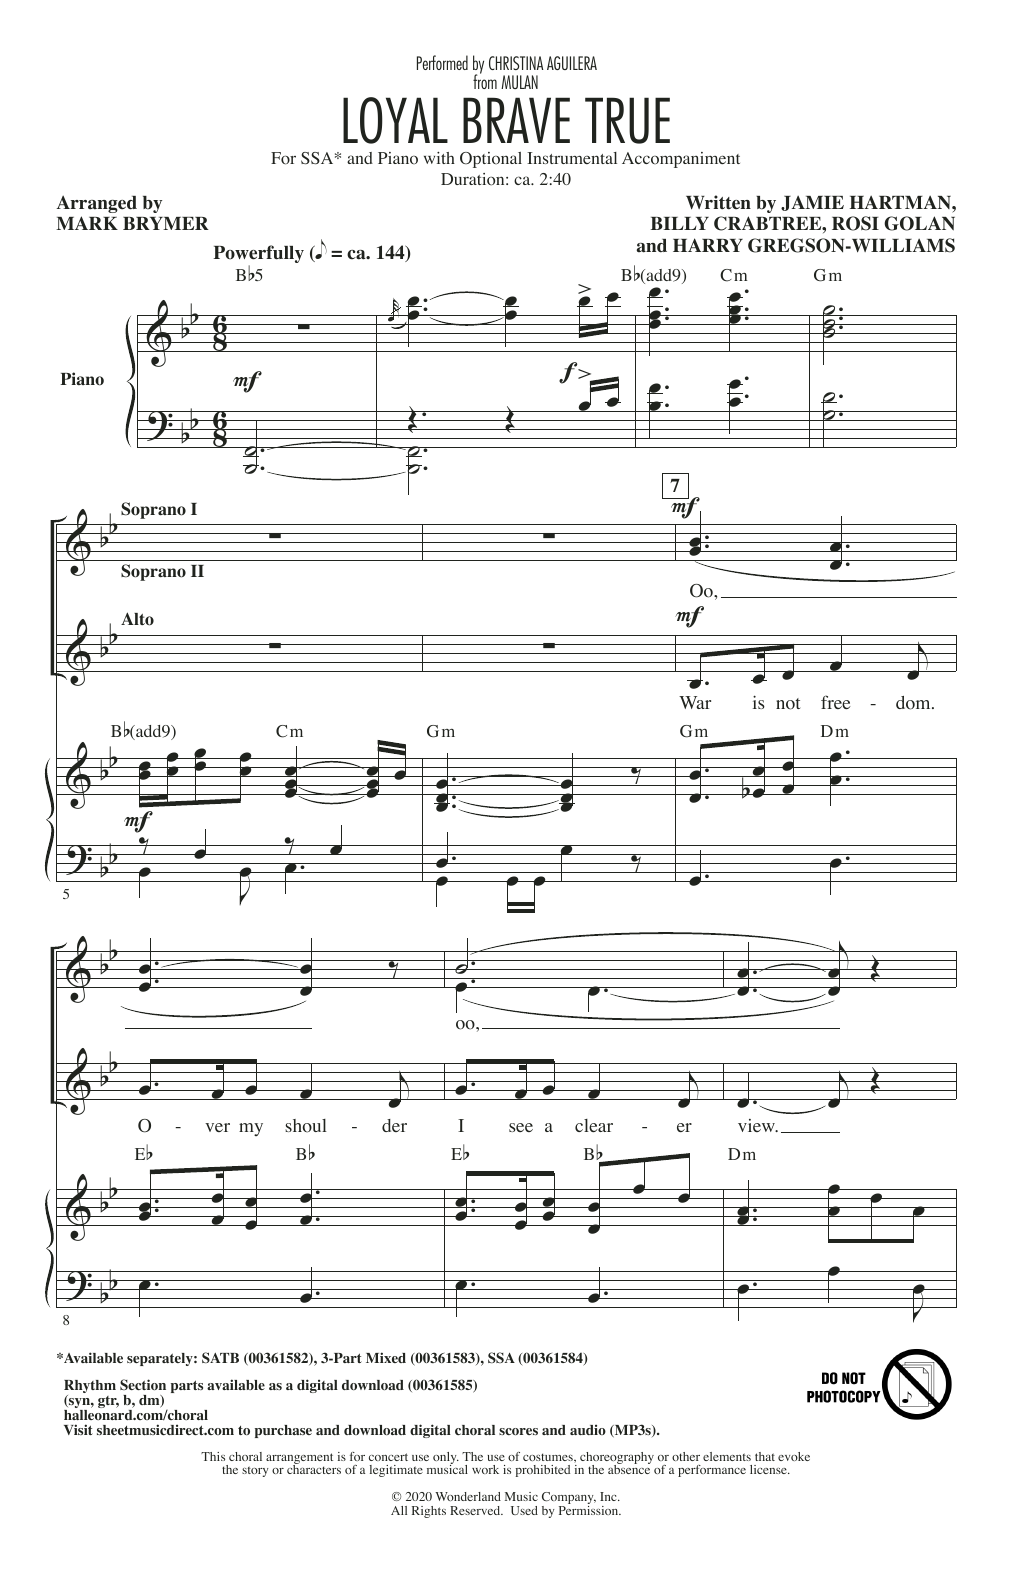 Christina Aguilera Loyal Brave True (from Mulan) (arr. Mark Brymer) Sheet Music Notes & Chords for SAB Choir - Download or Print PDF